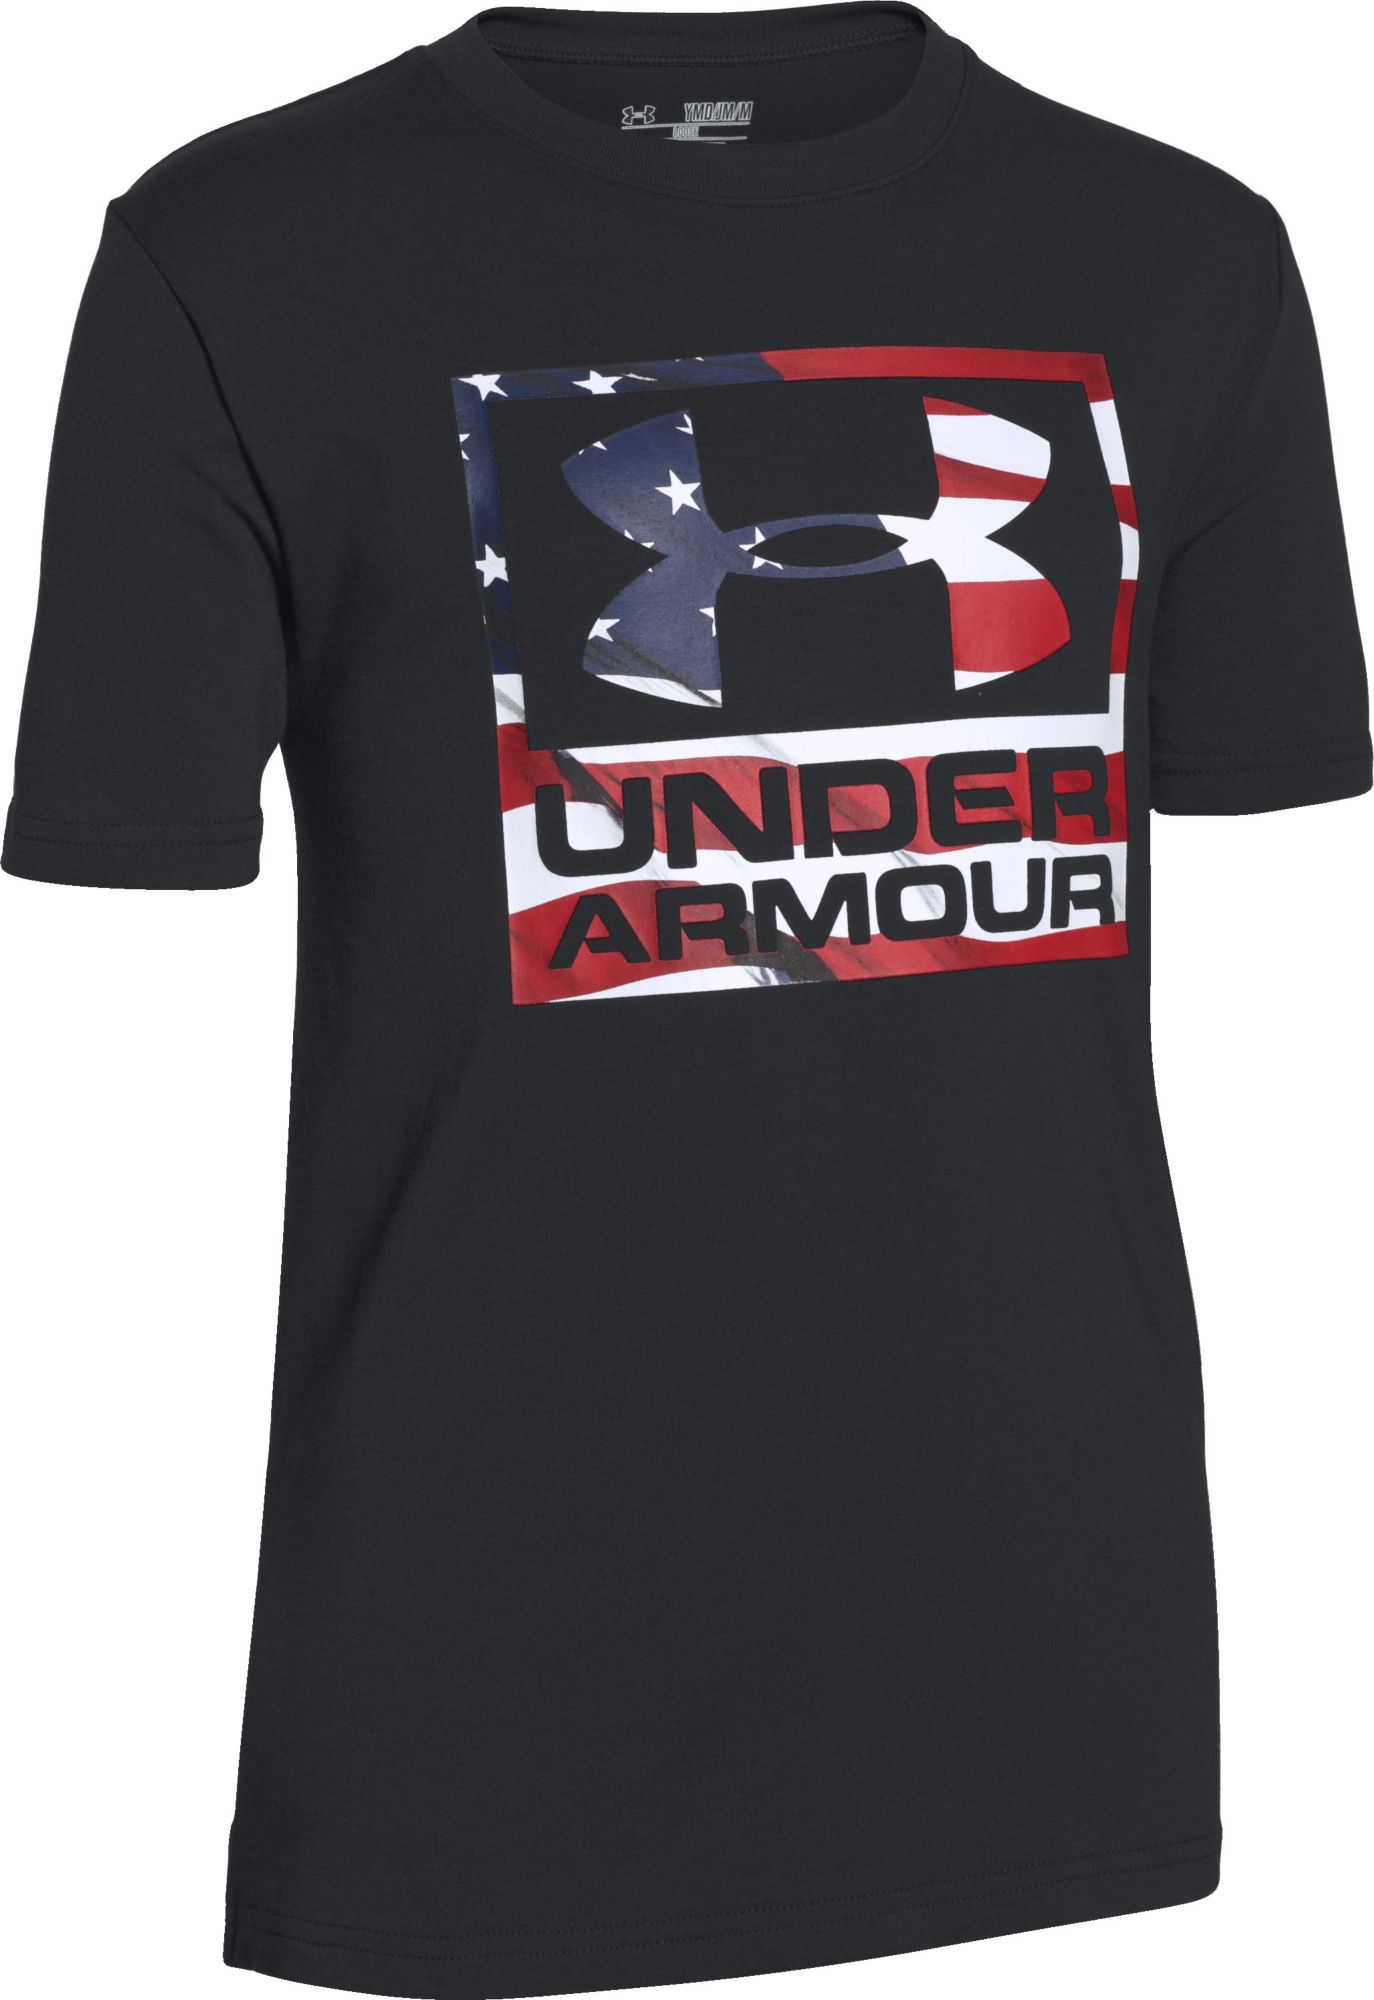 Cheap Under Armor T Shirts Rldm - police shirts roblox rldm